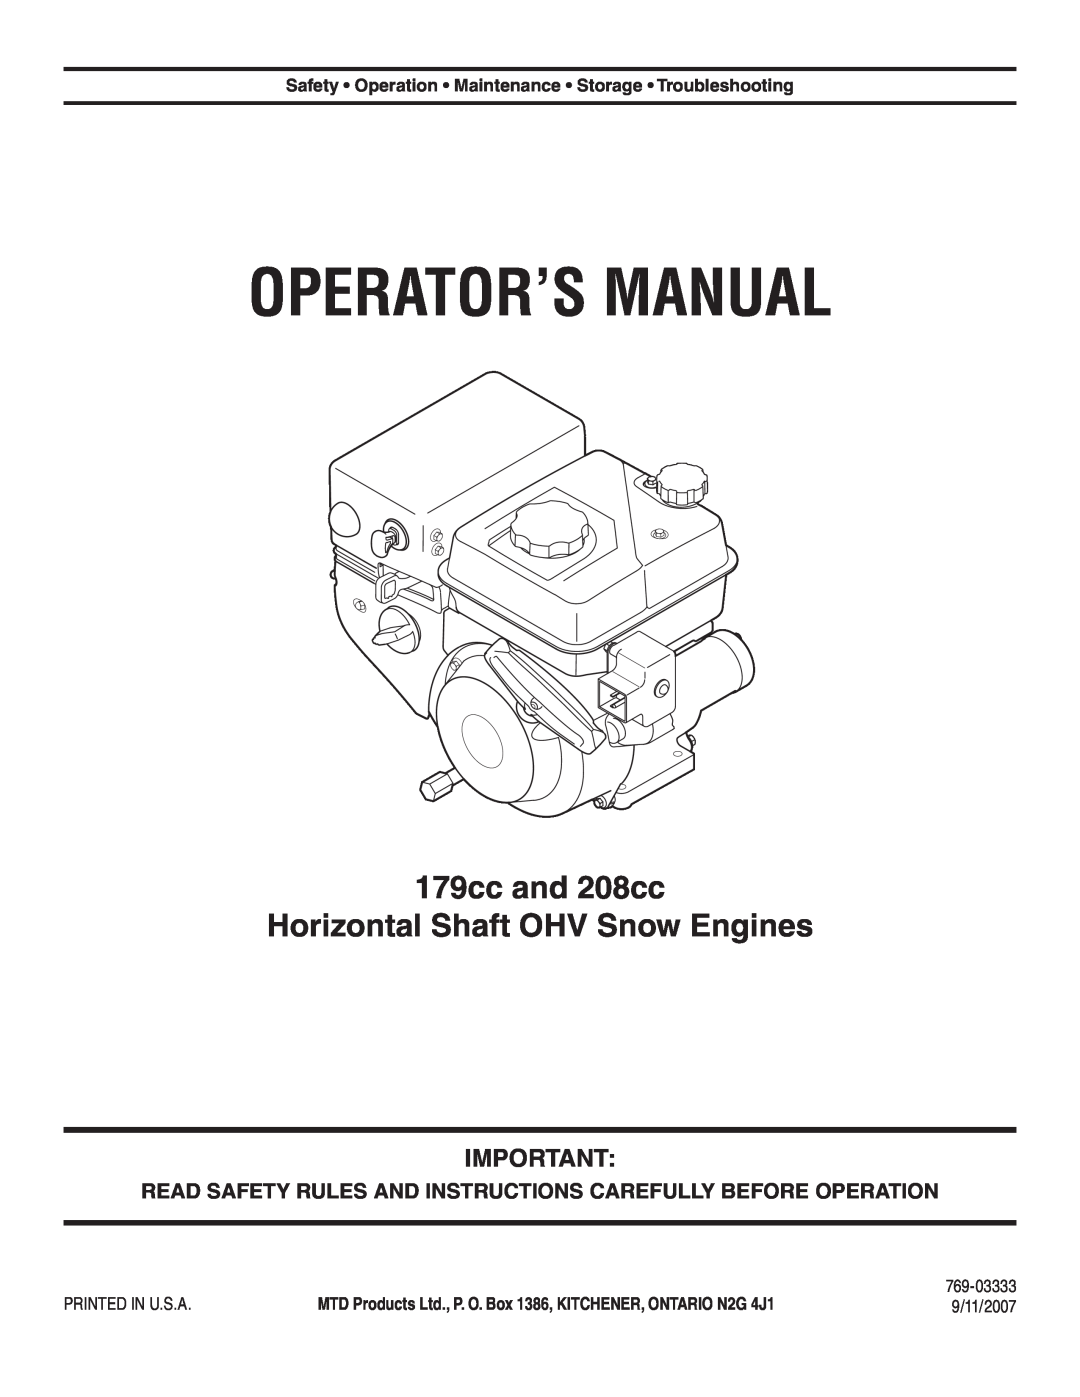 MTD manual Operator’S Manual, 179cc and 208cc Horizontal Shaft OHV Snow Engines 